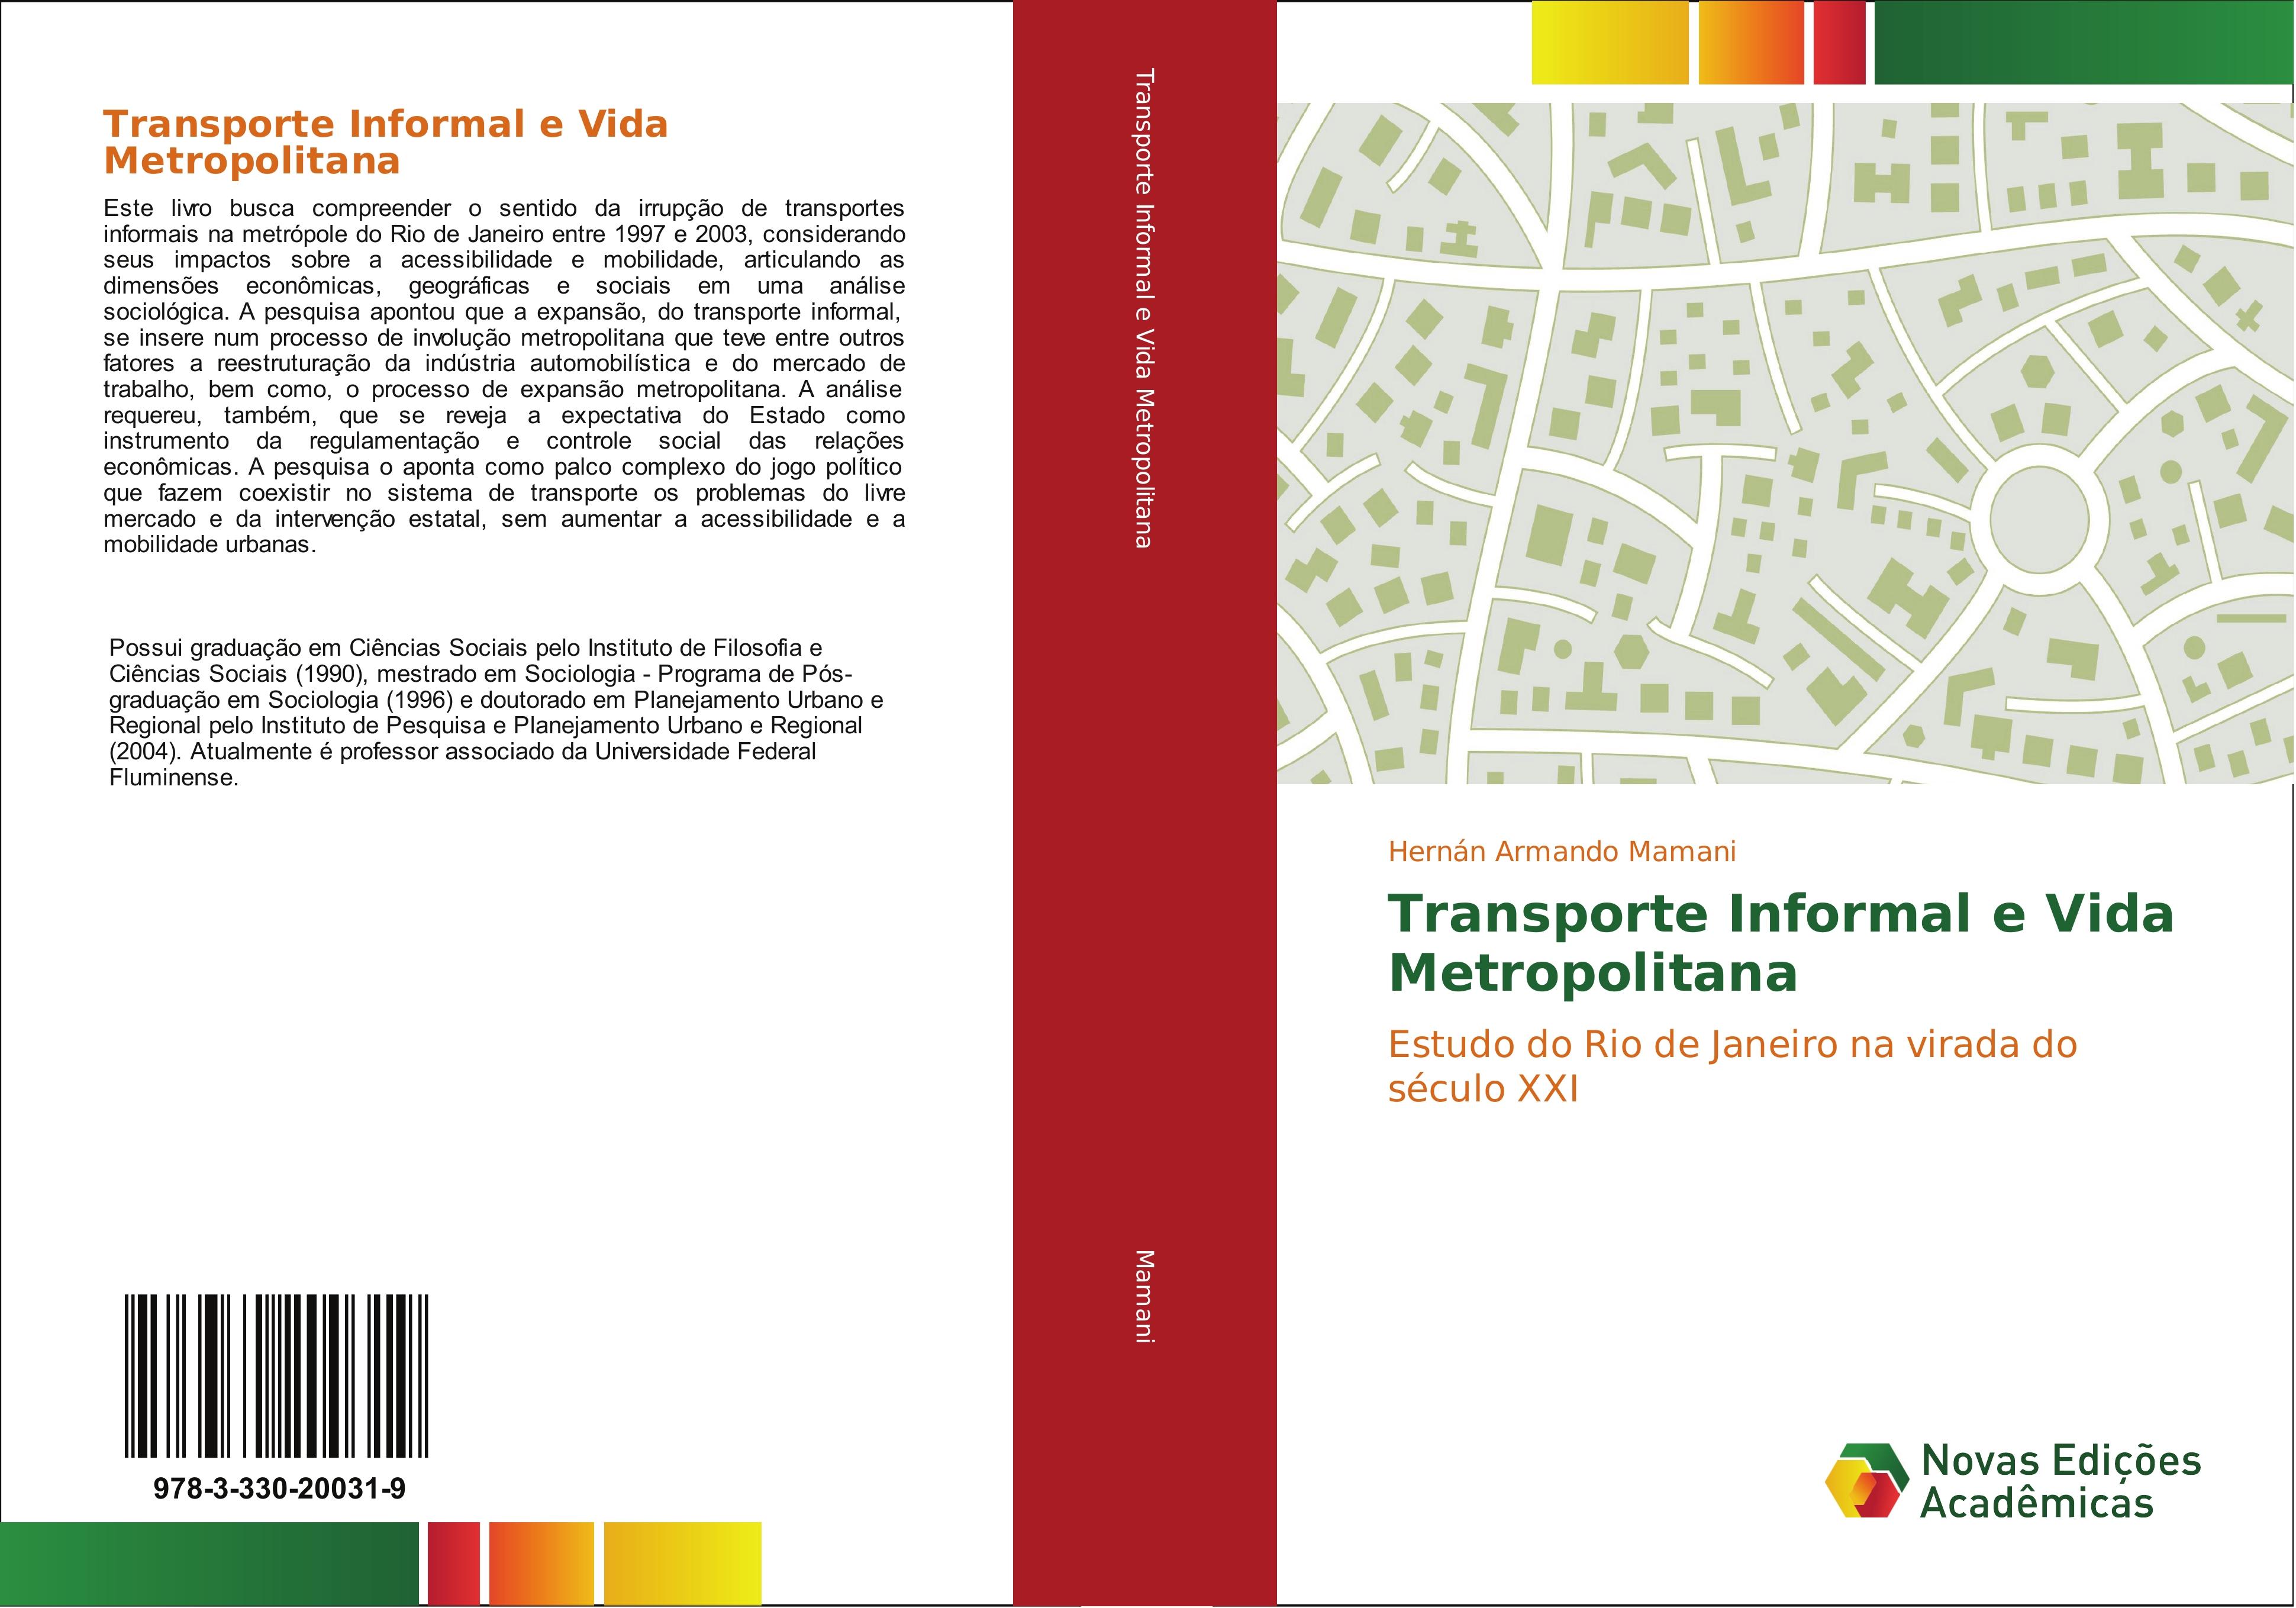 Transporte Informal e Vida Metropolitana - Hernán Armando Mamani